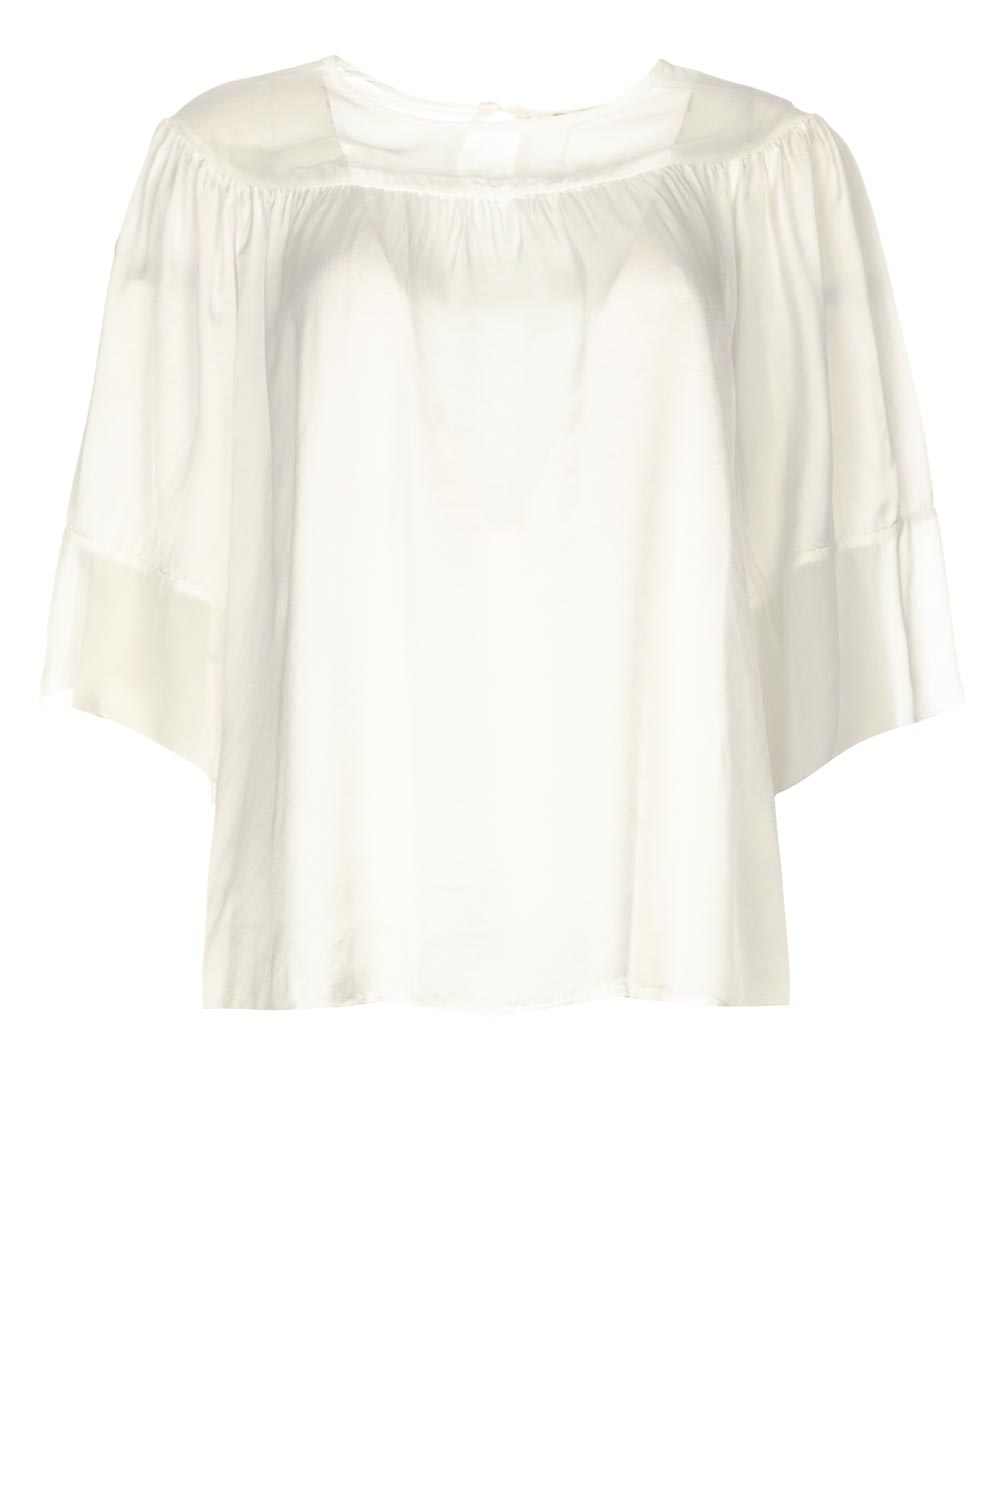 Fracomina Transparante blouse Vivian wit